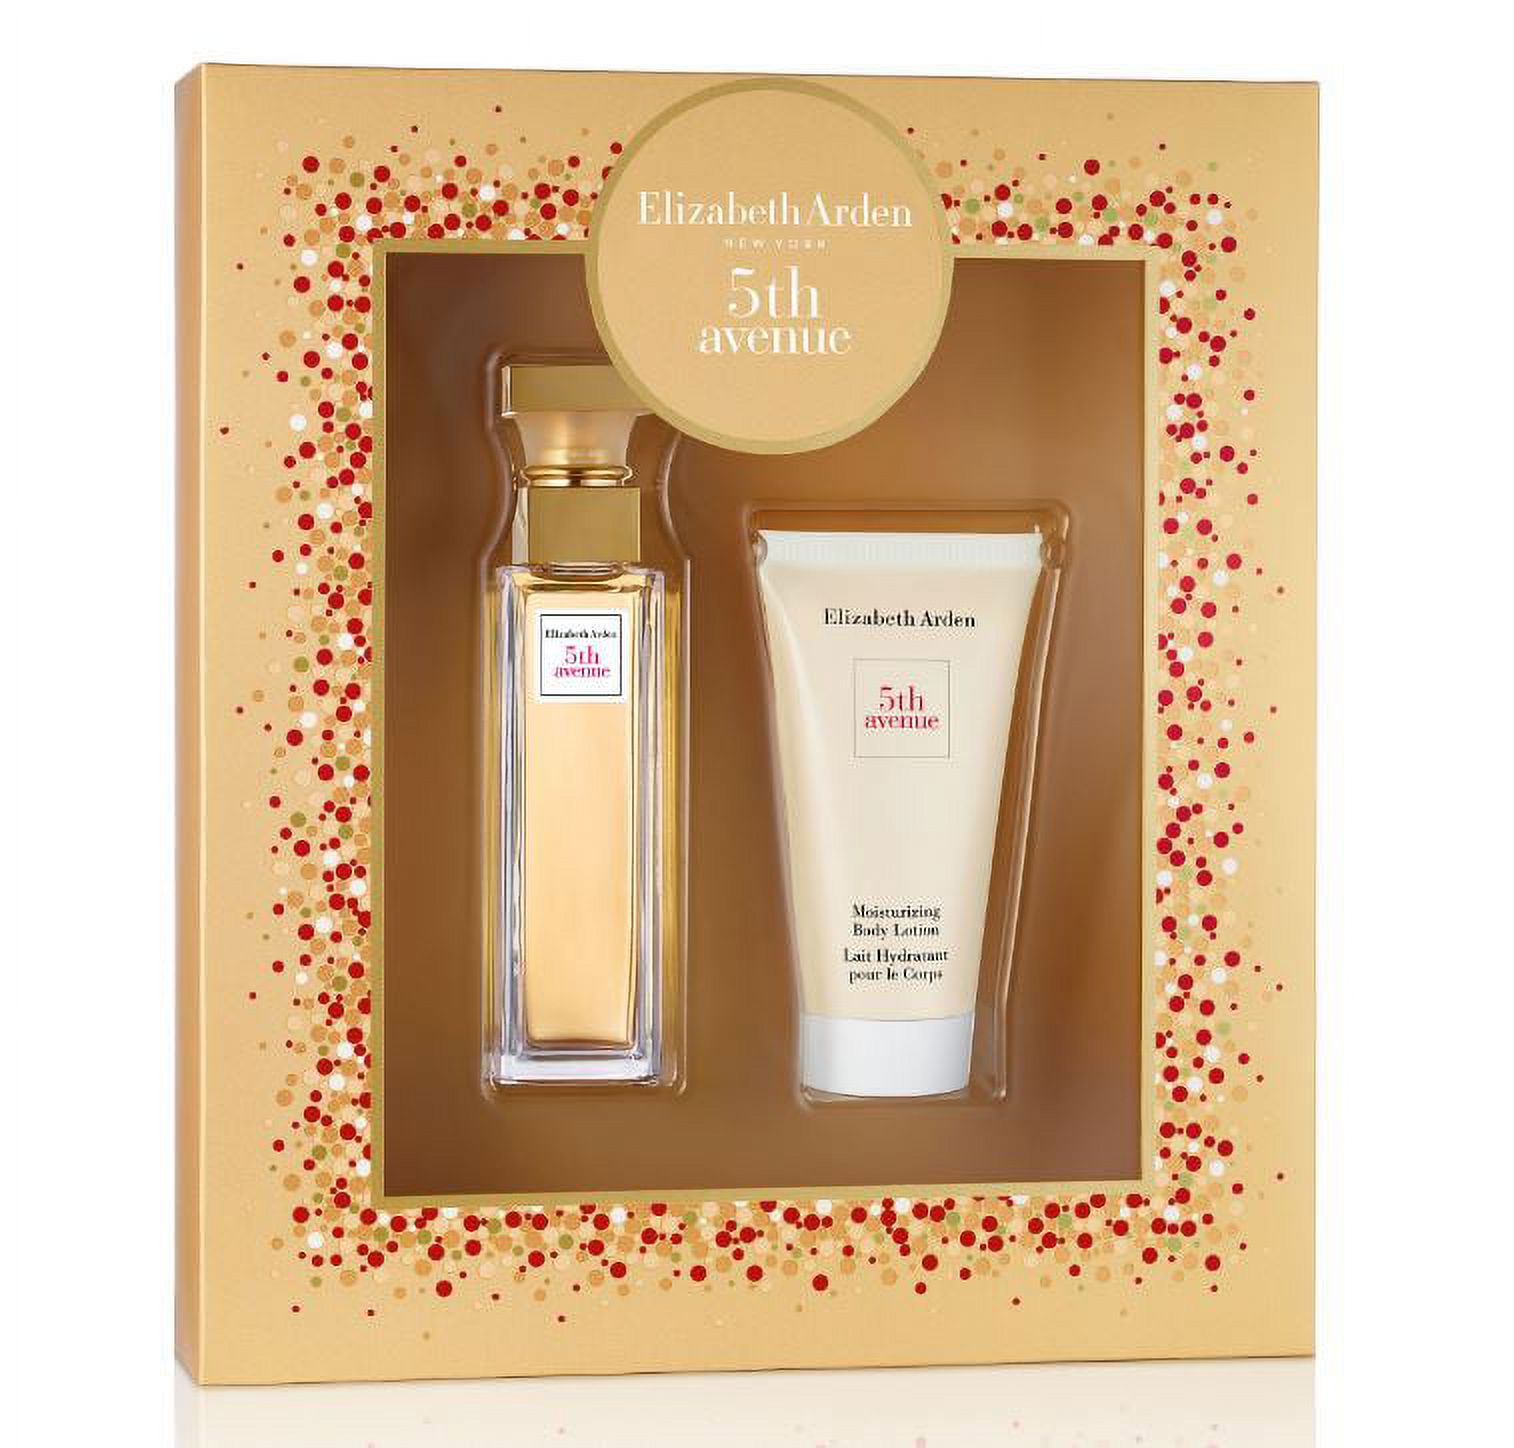 Elizabeth Arden 5th Avenue Perfume Gift Set for Women, 2 piece - image 1 of 3